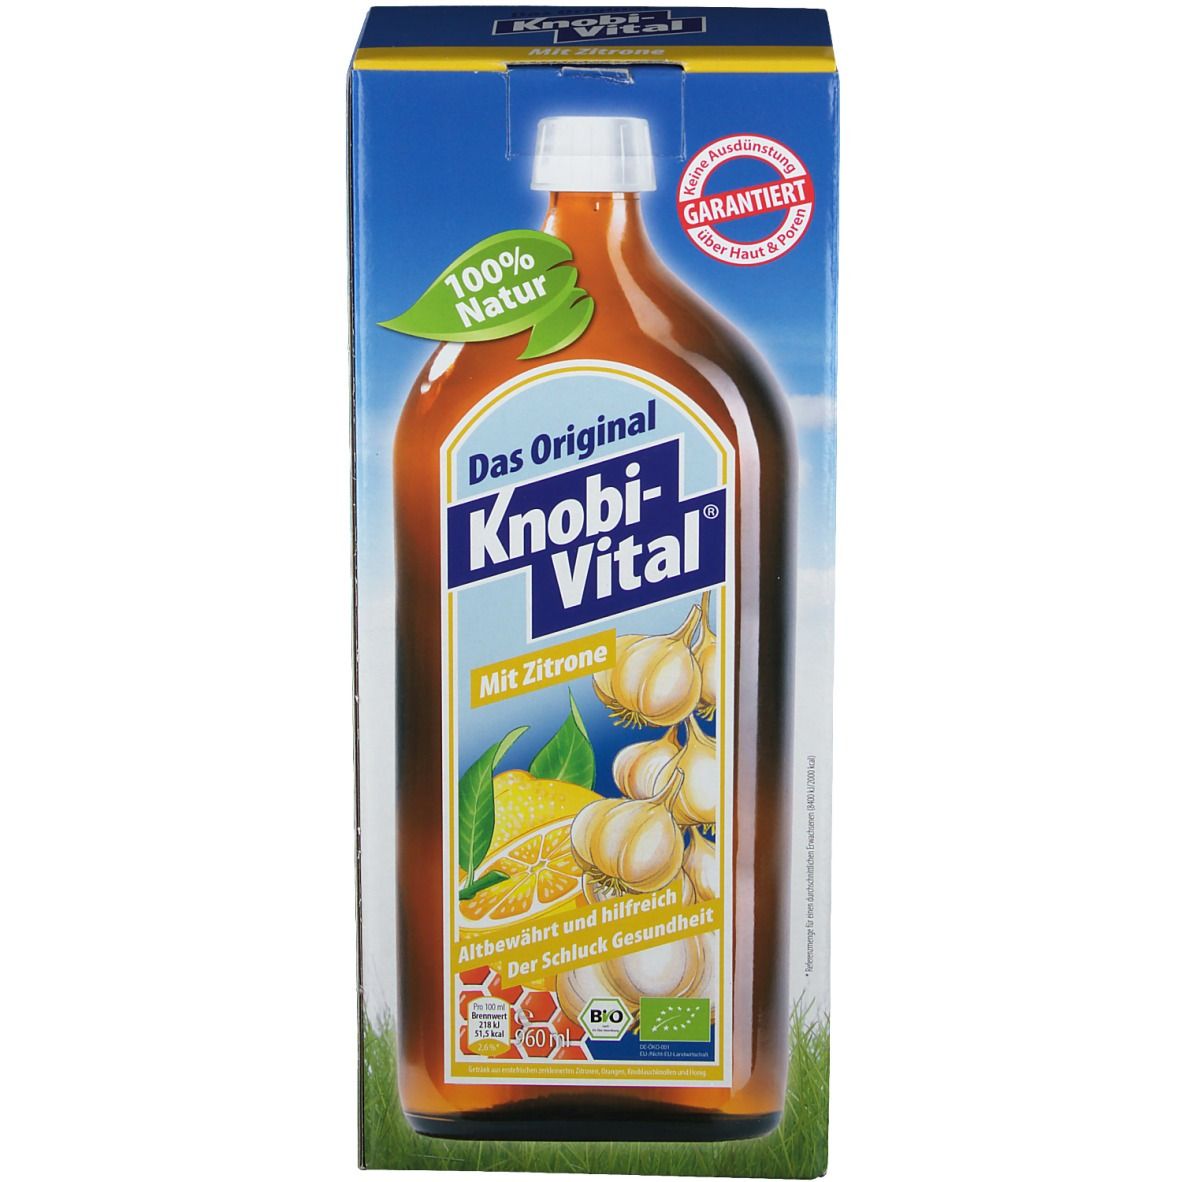 KnobiVital® mit Zitrone Bio